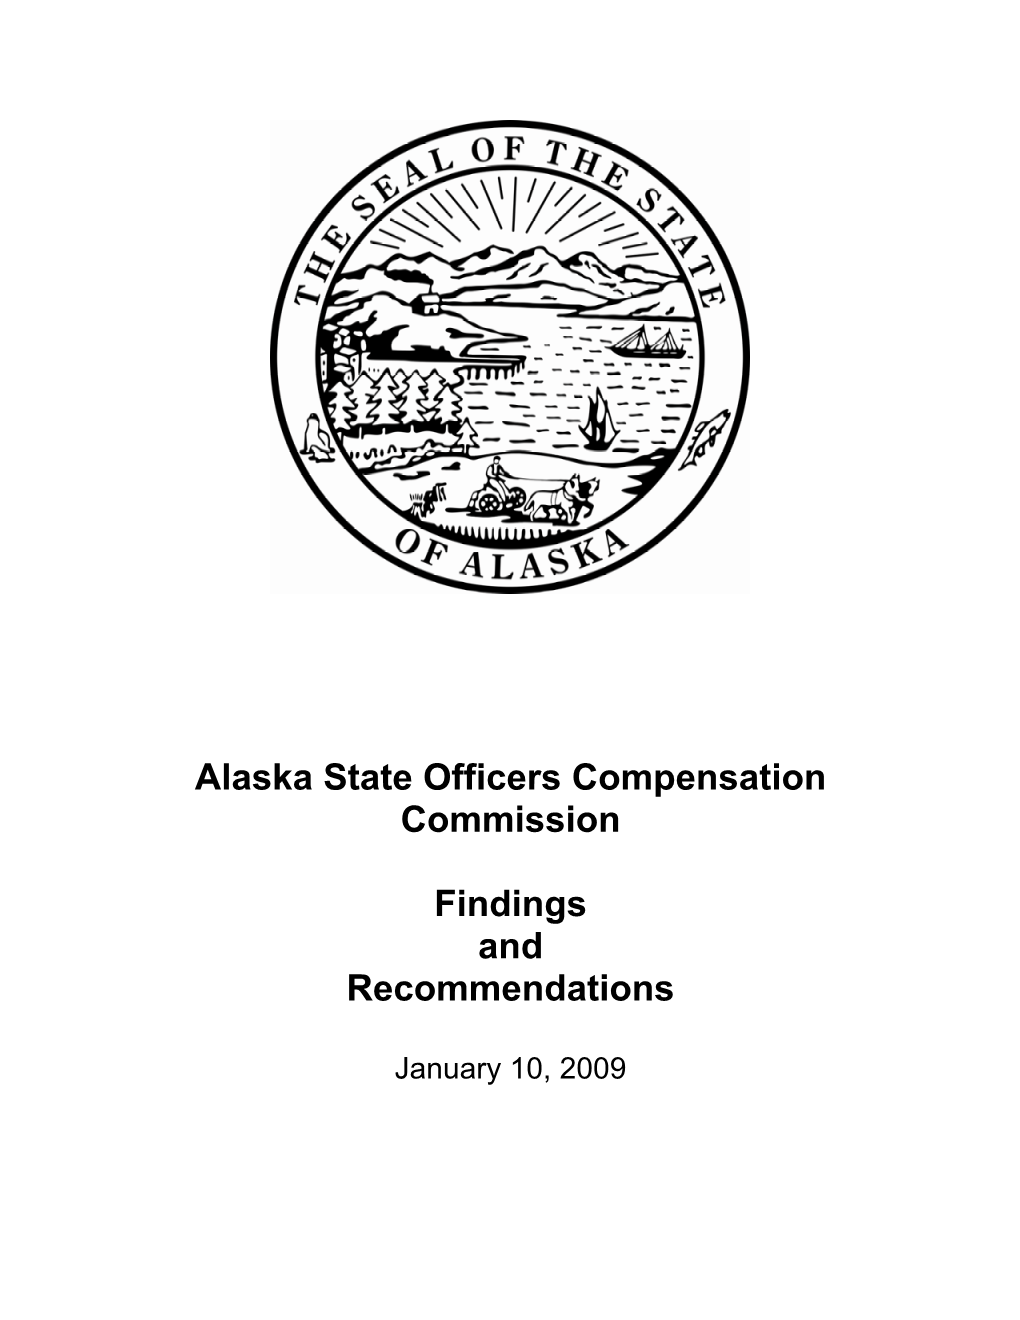 Alaska State Officers Compensation Commission